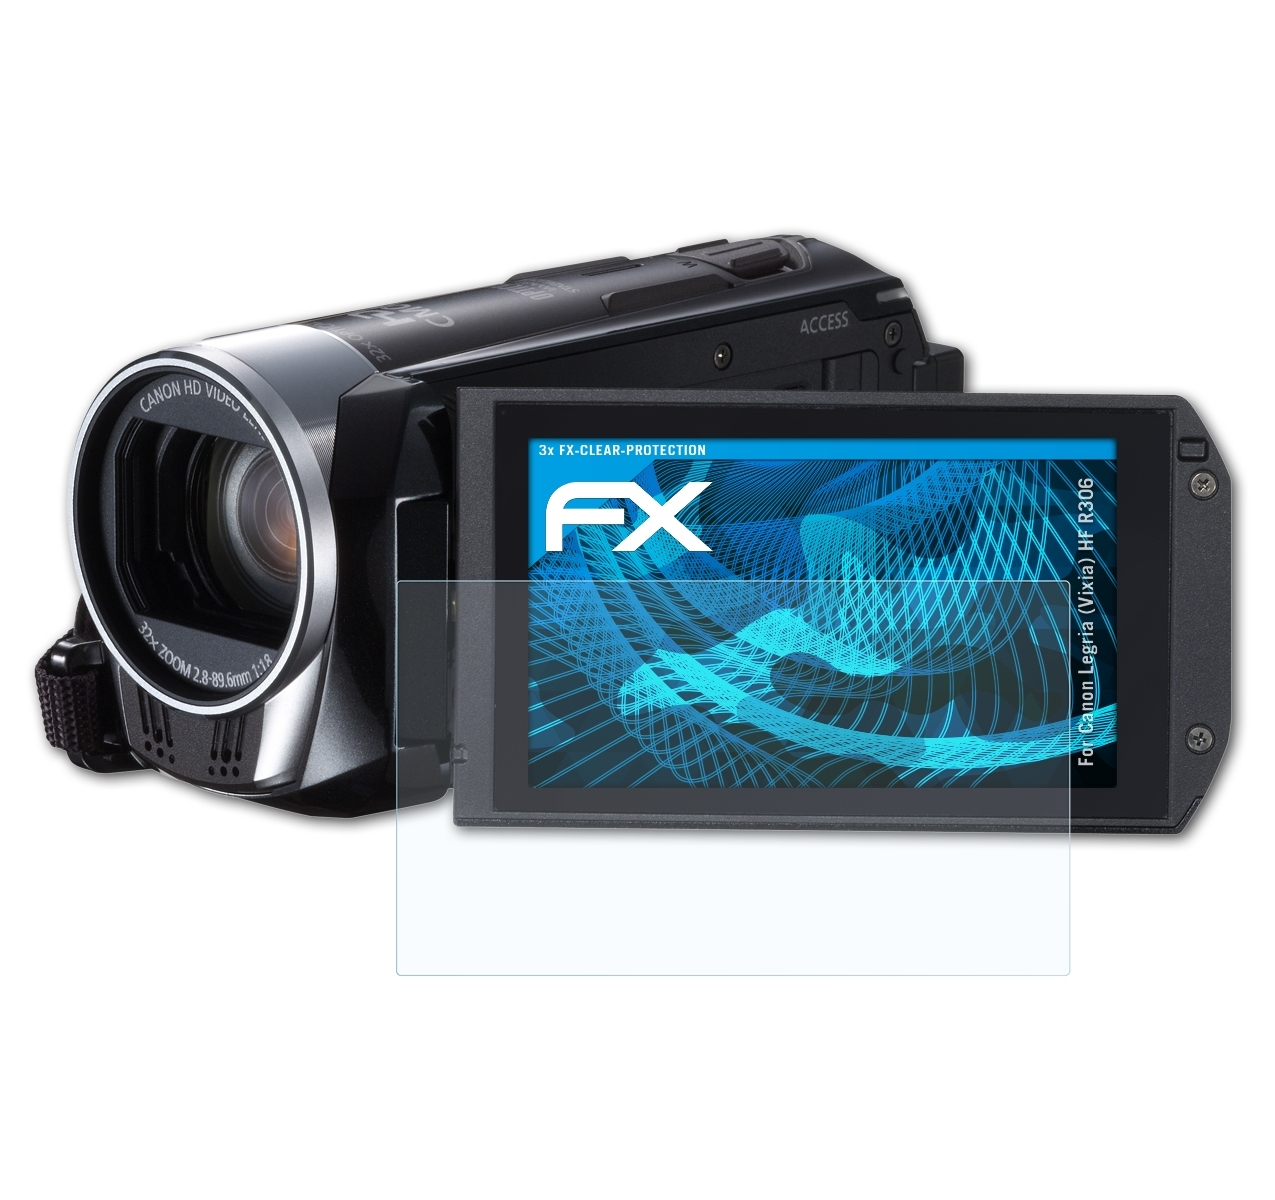 ATFOLIX 3x FX-Clear (Vixia) Legria R306) Displayschutz(für Canon HF